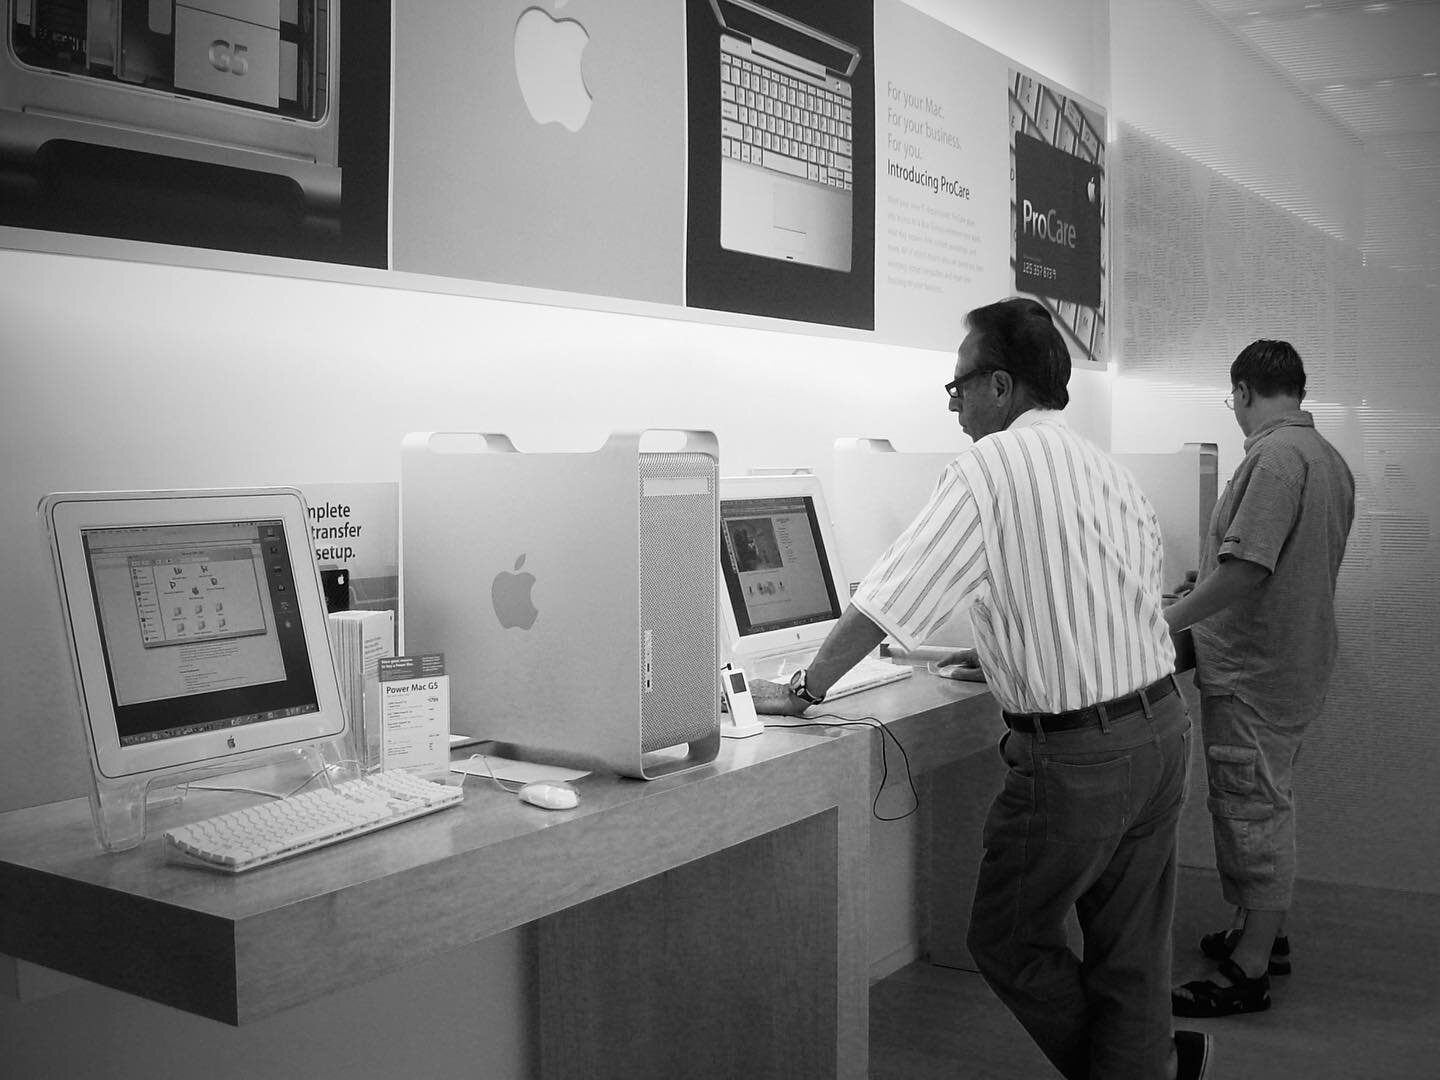 Apple Store, 2004.

.
.
.
.
.
.

#bw #bwphotos #bwphoto #bwphotography #bw_photos #bw_photography #bnw #bnwphotography #bnwphotos #blancoynegro #fotosbyn #bwaddiction #bnwaddictions #monochromatic #blackandwhite #applestore